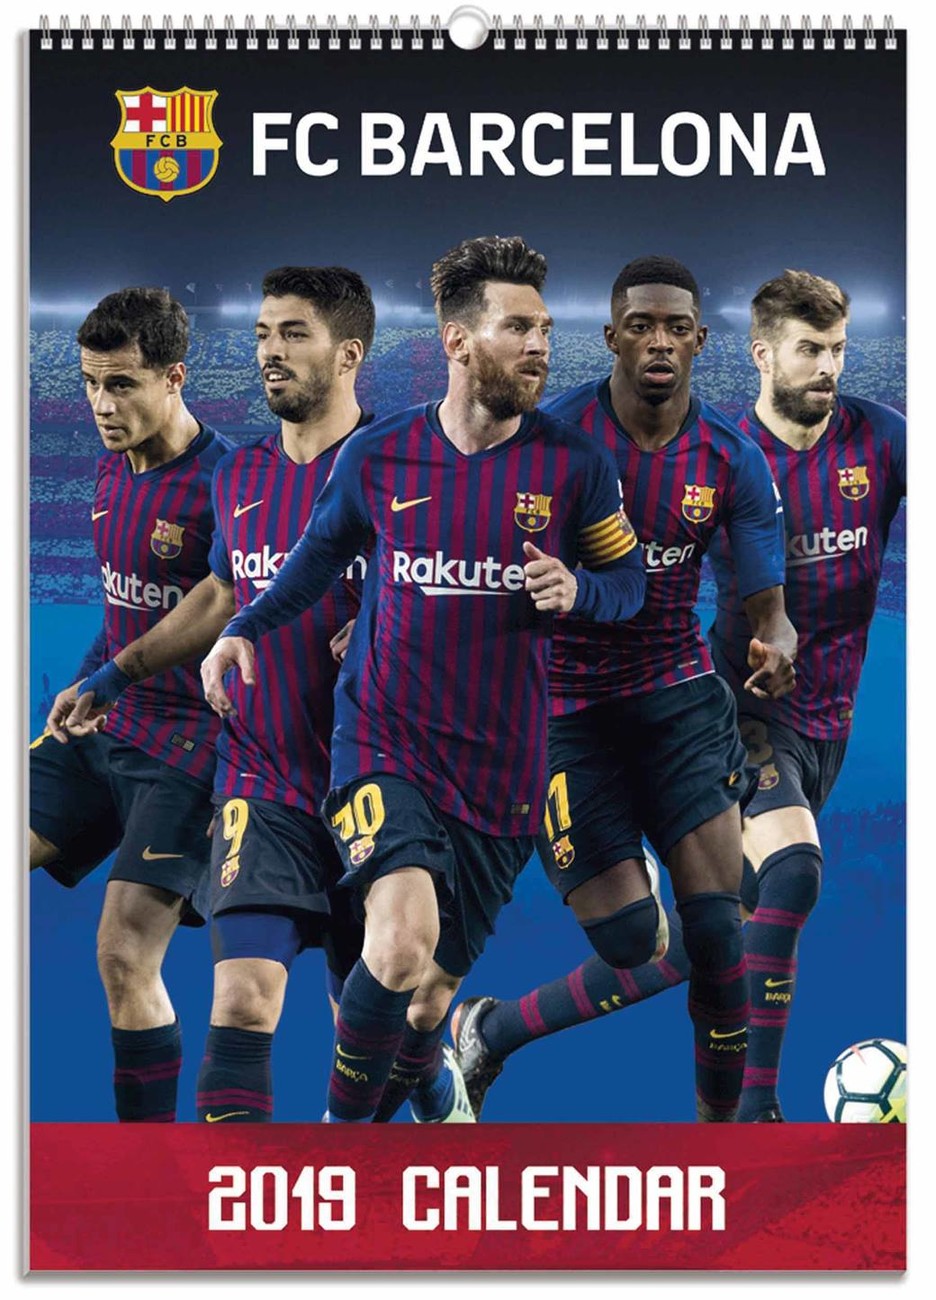 Barcelona Spiele 2021